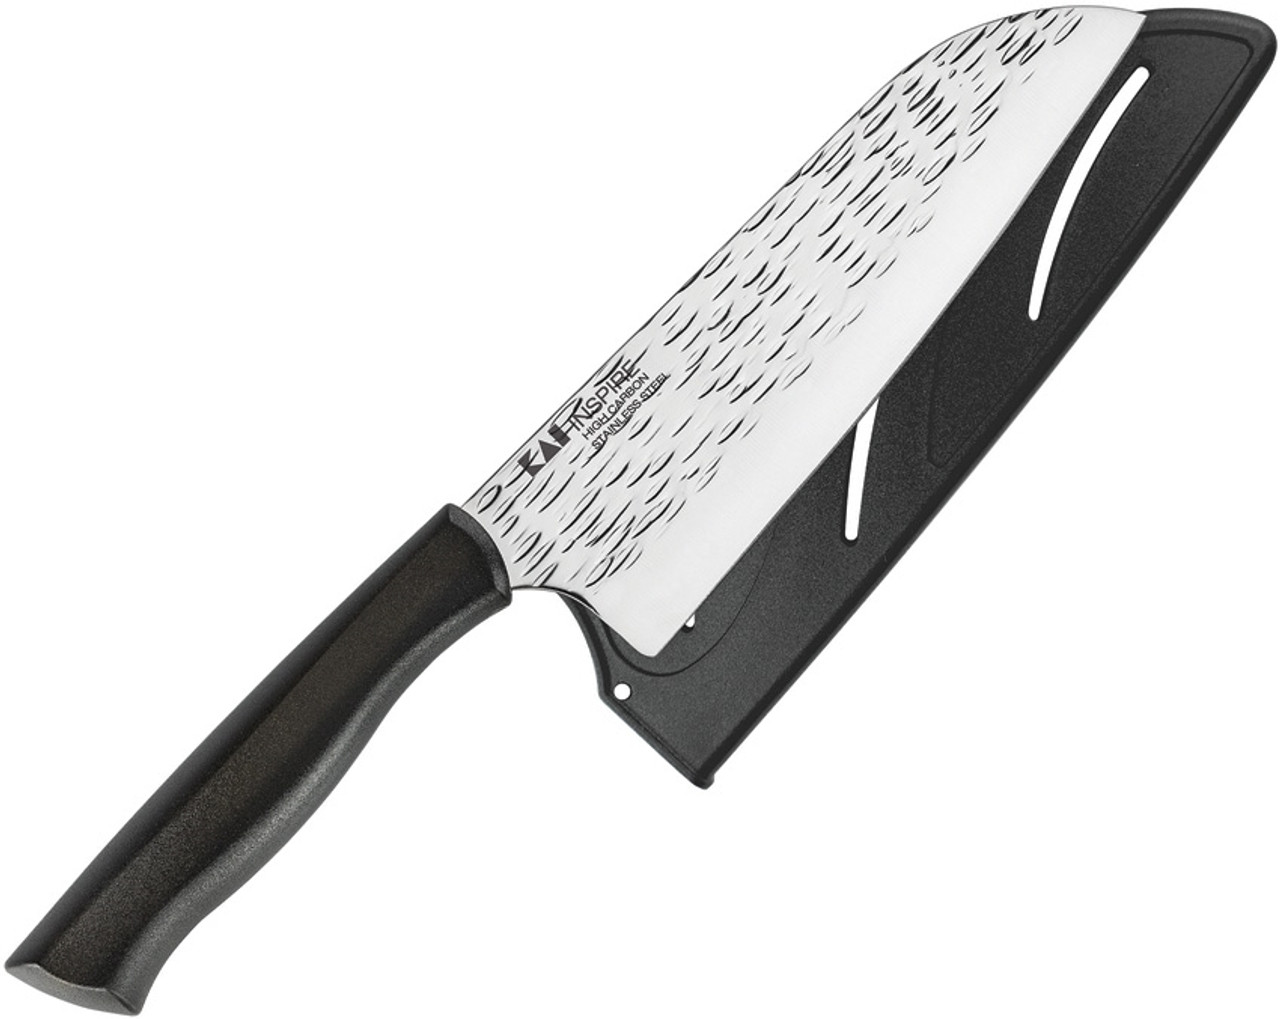 Kershaw Inspire Santoku, 6.75" Hammered 4116 Stainless Blade, Black Synthetic Handle